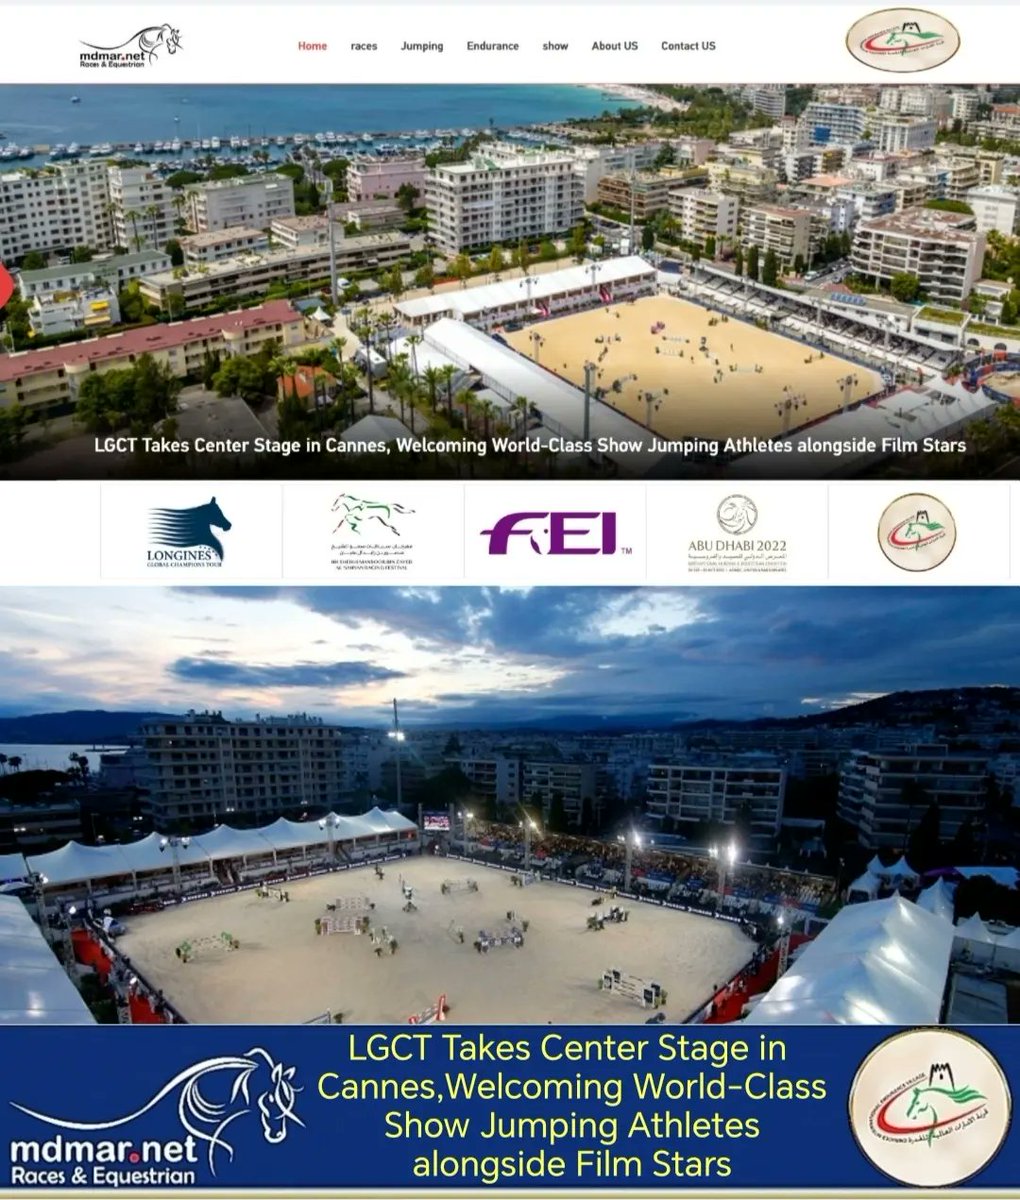 #LGCT Takes Center Stage in #Cannes Welcoming World-Class #Show_Jumping Athletes alongside #Film_Stars
#موقع_مضمار #فروسية #جولات_لونجين_العالمية_لأبطال_قفز_الحواجز #لونجين #كان 
#mdmarrace #mdmarace #LGCT #show_jumping #gcl_official 
#global_champions_tour #Longines #horse